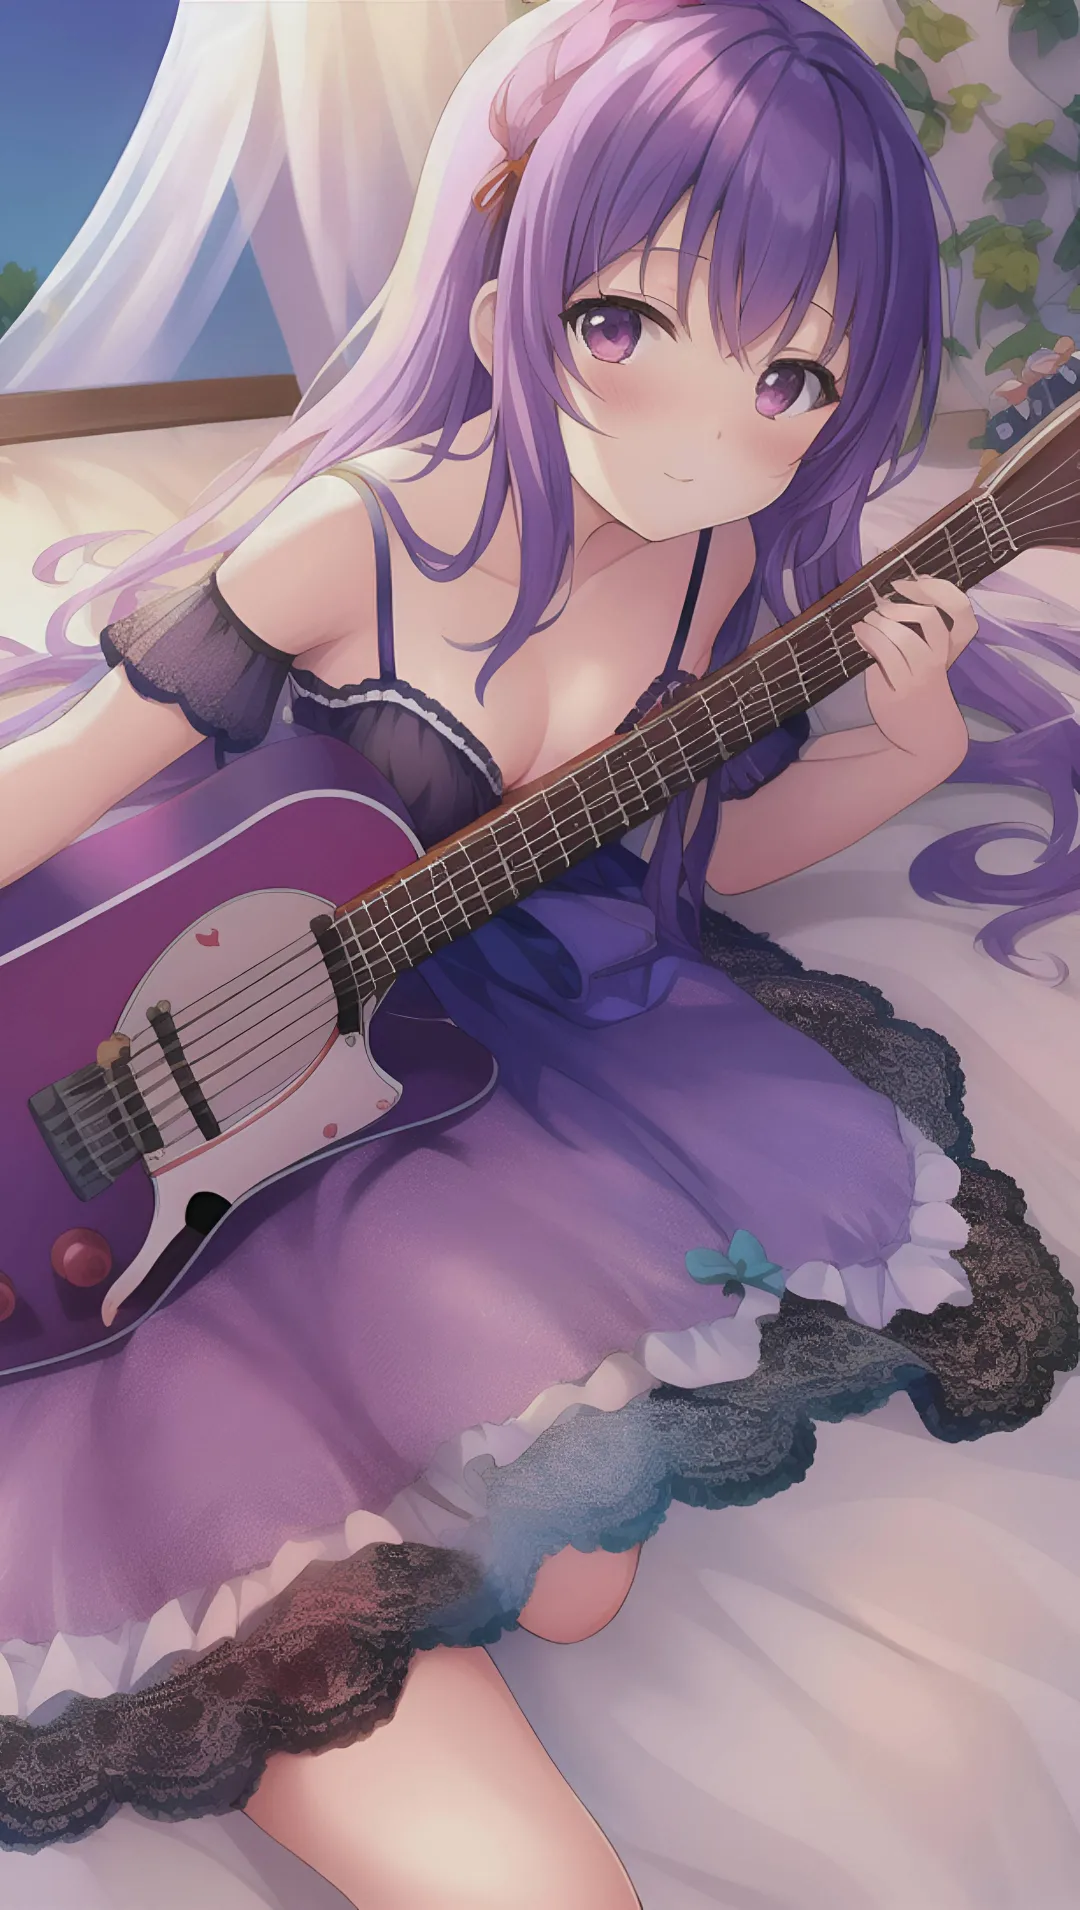 thumb for Anime Girl With Guitar Wallpaper